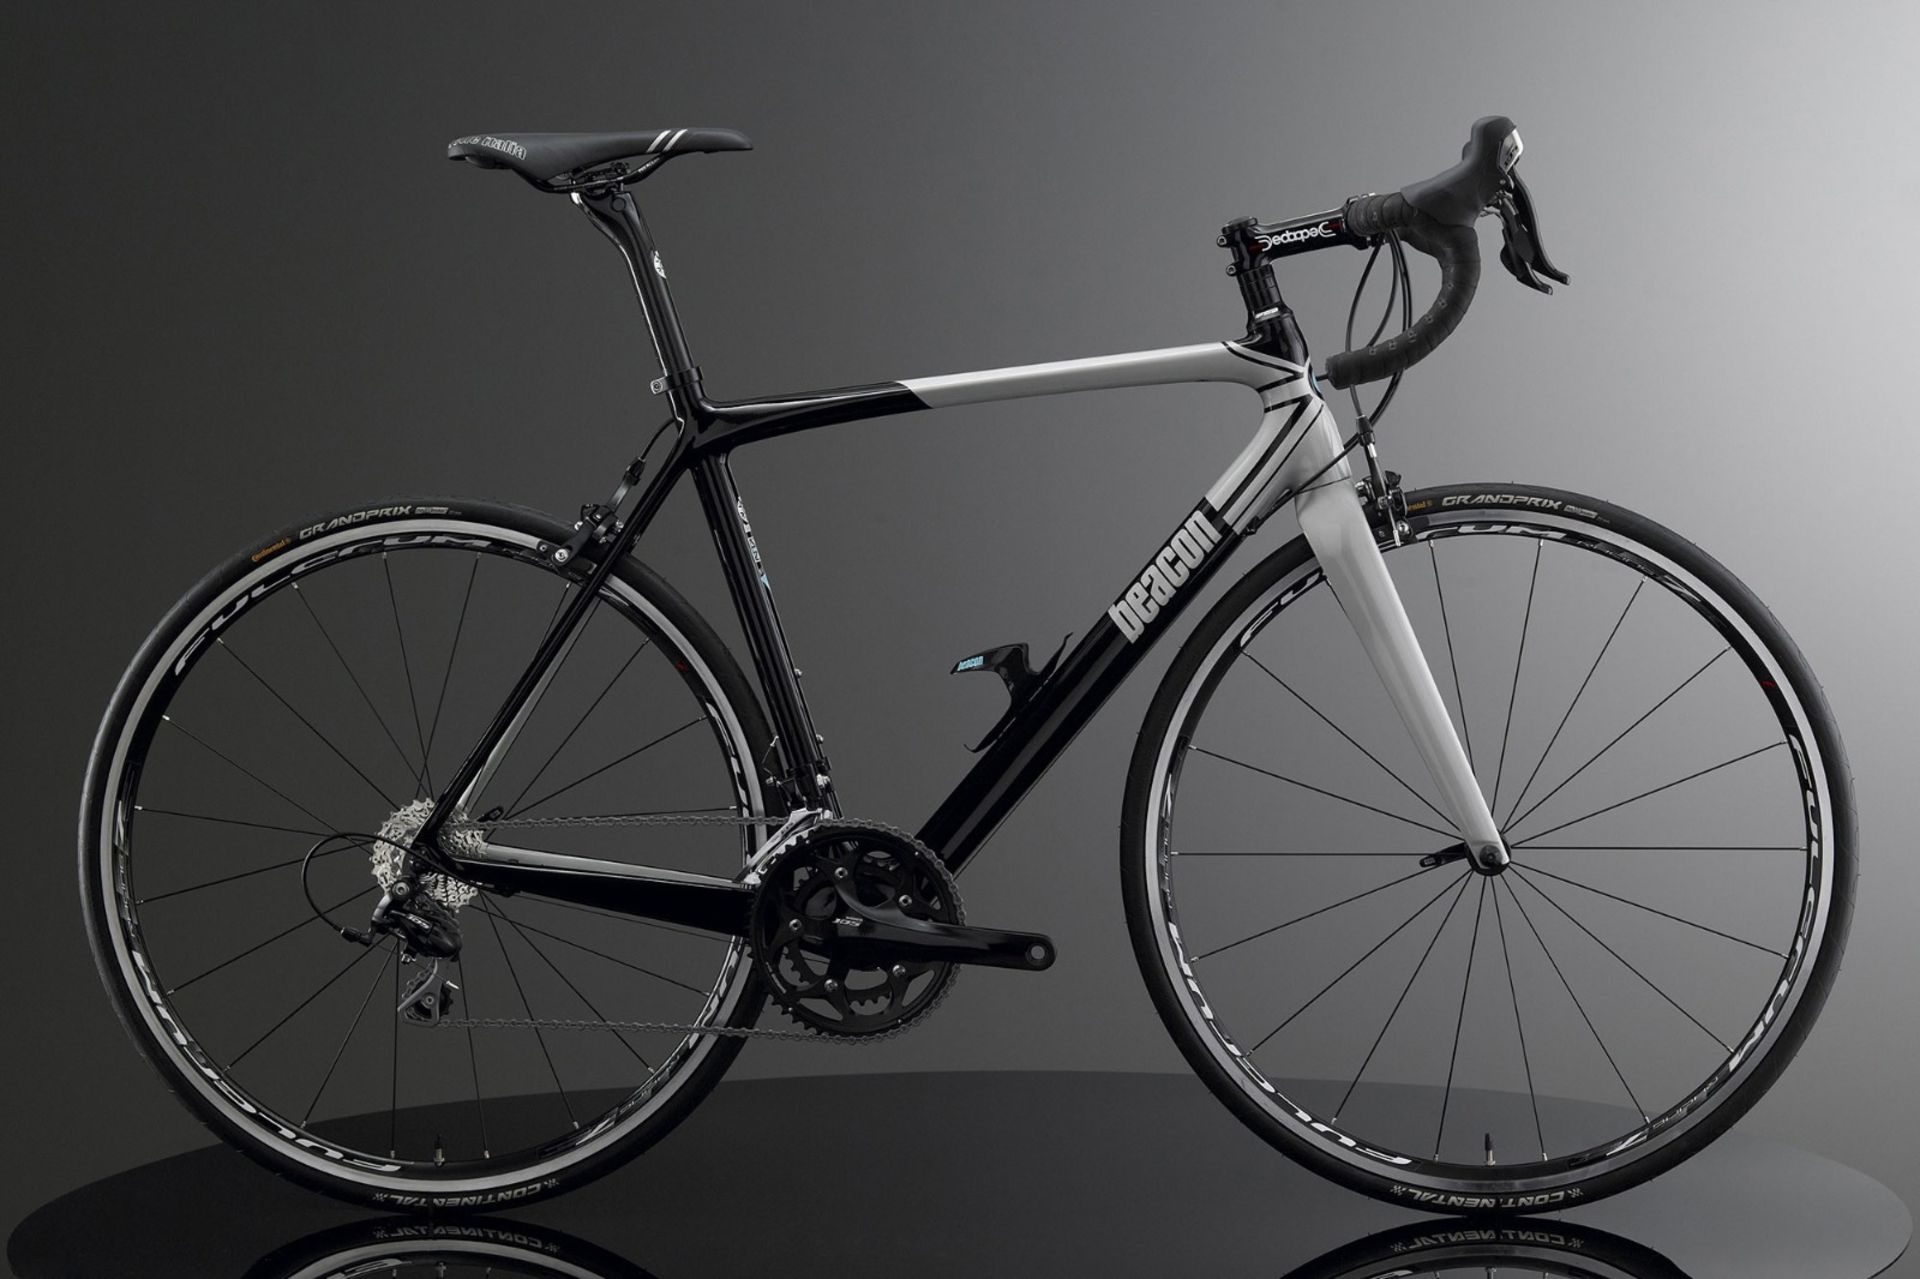 1 x Beacon Model BF-70, Size 560, Carbon Fibre Bike Frame in Black & Light Grey. - Image 2 of 3